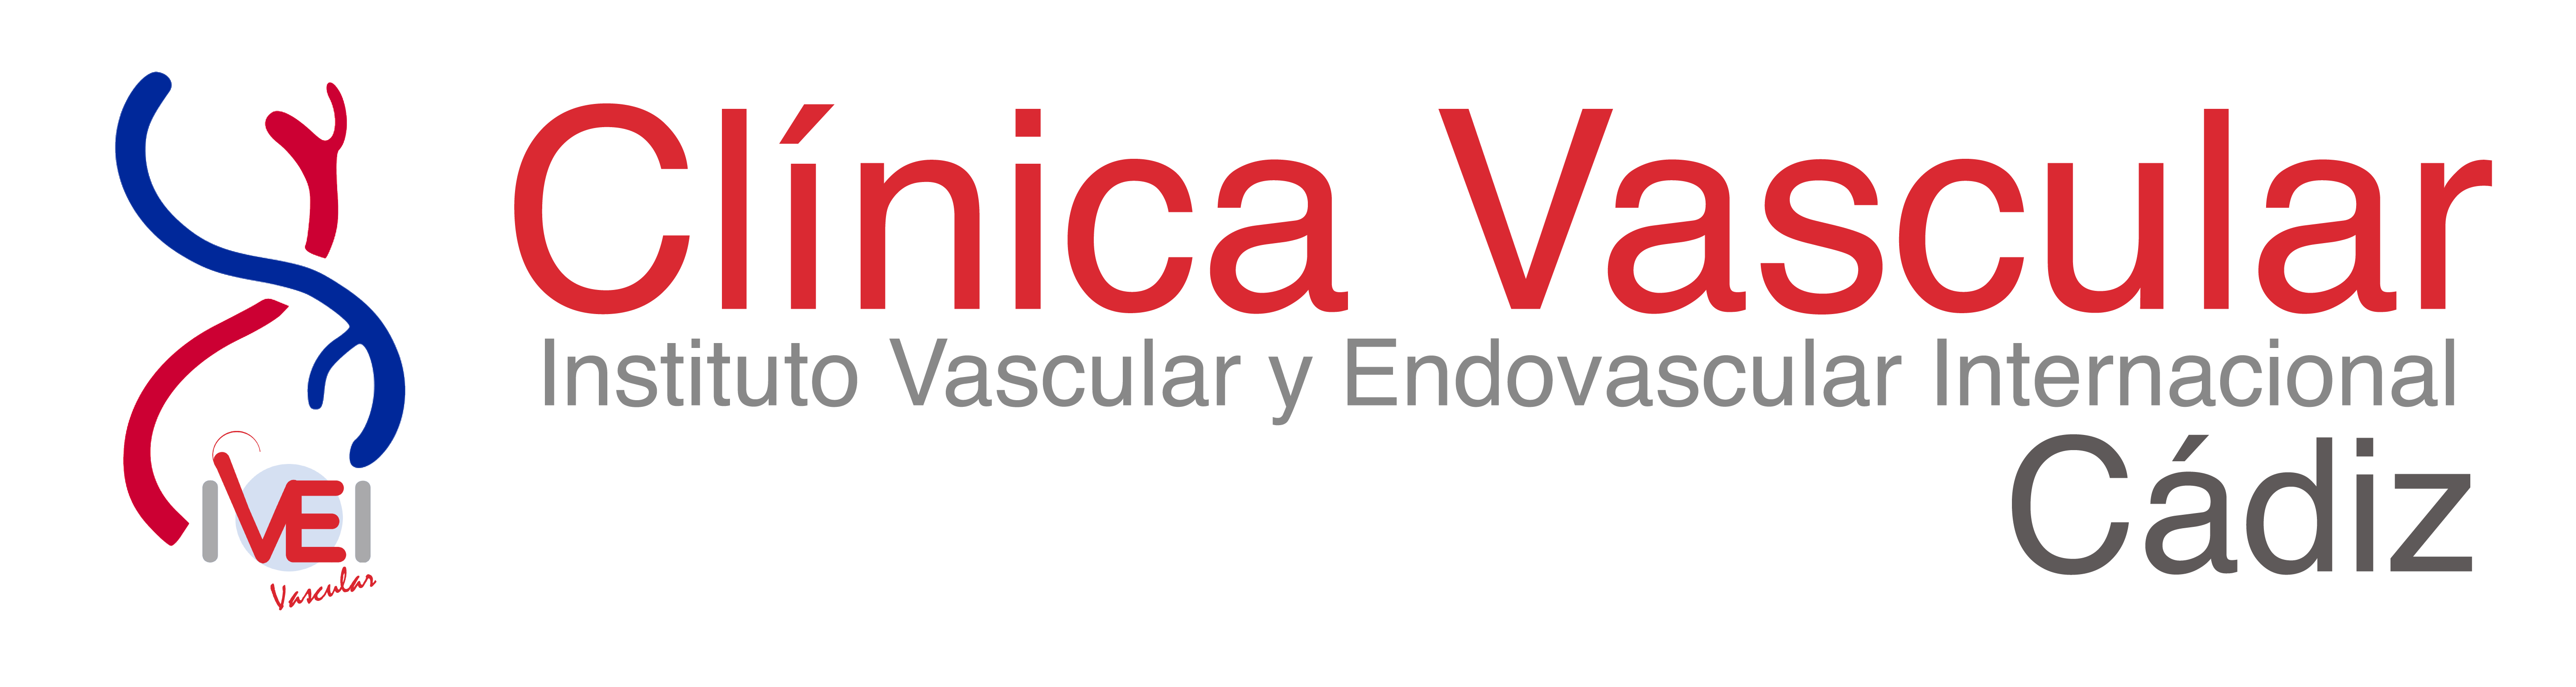 Logo Clínica Vascular IVEI Cádiz